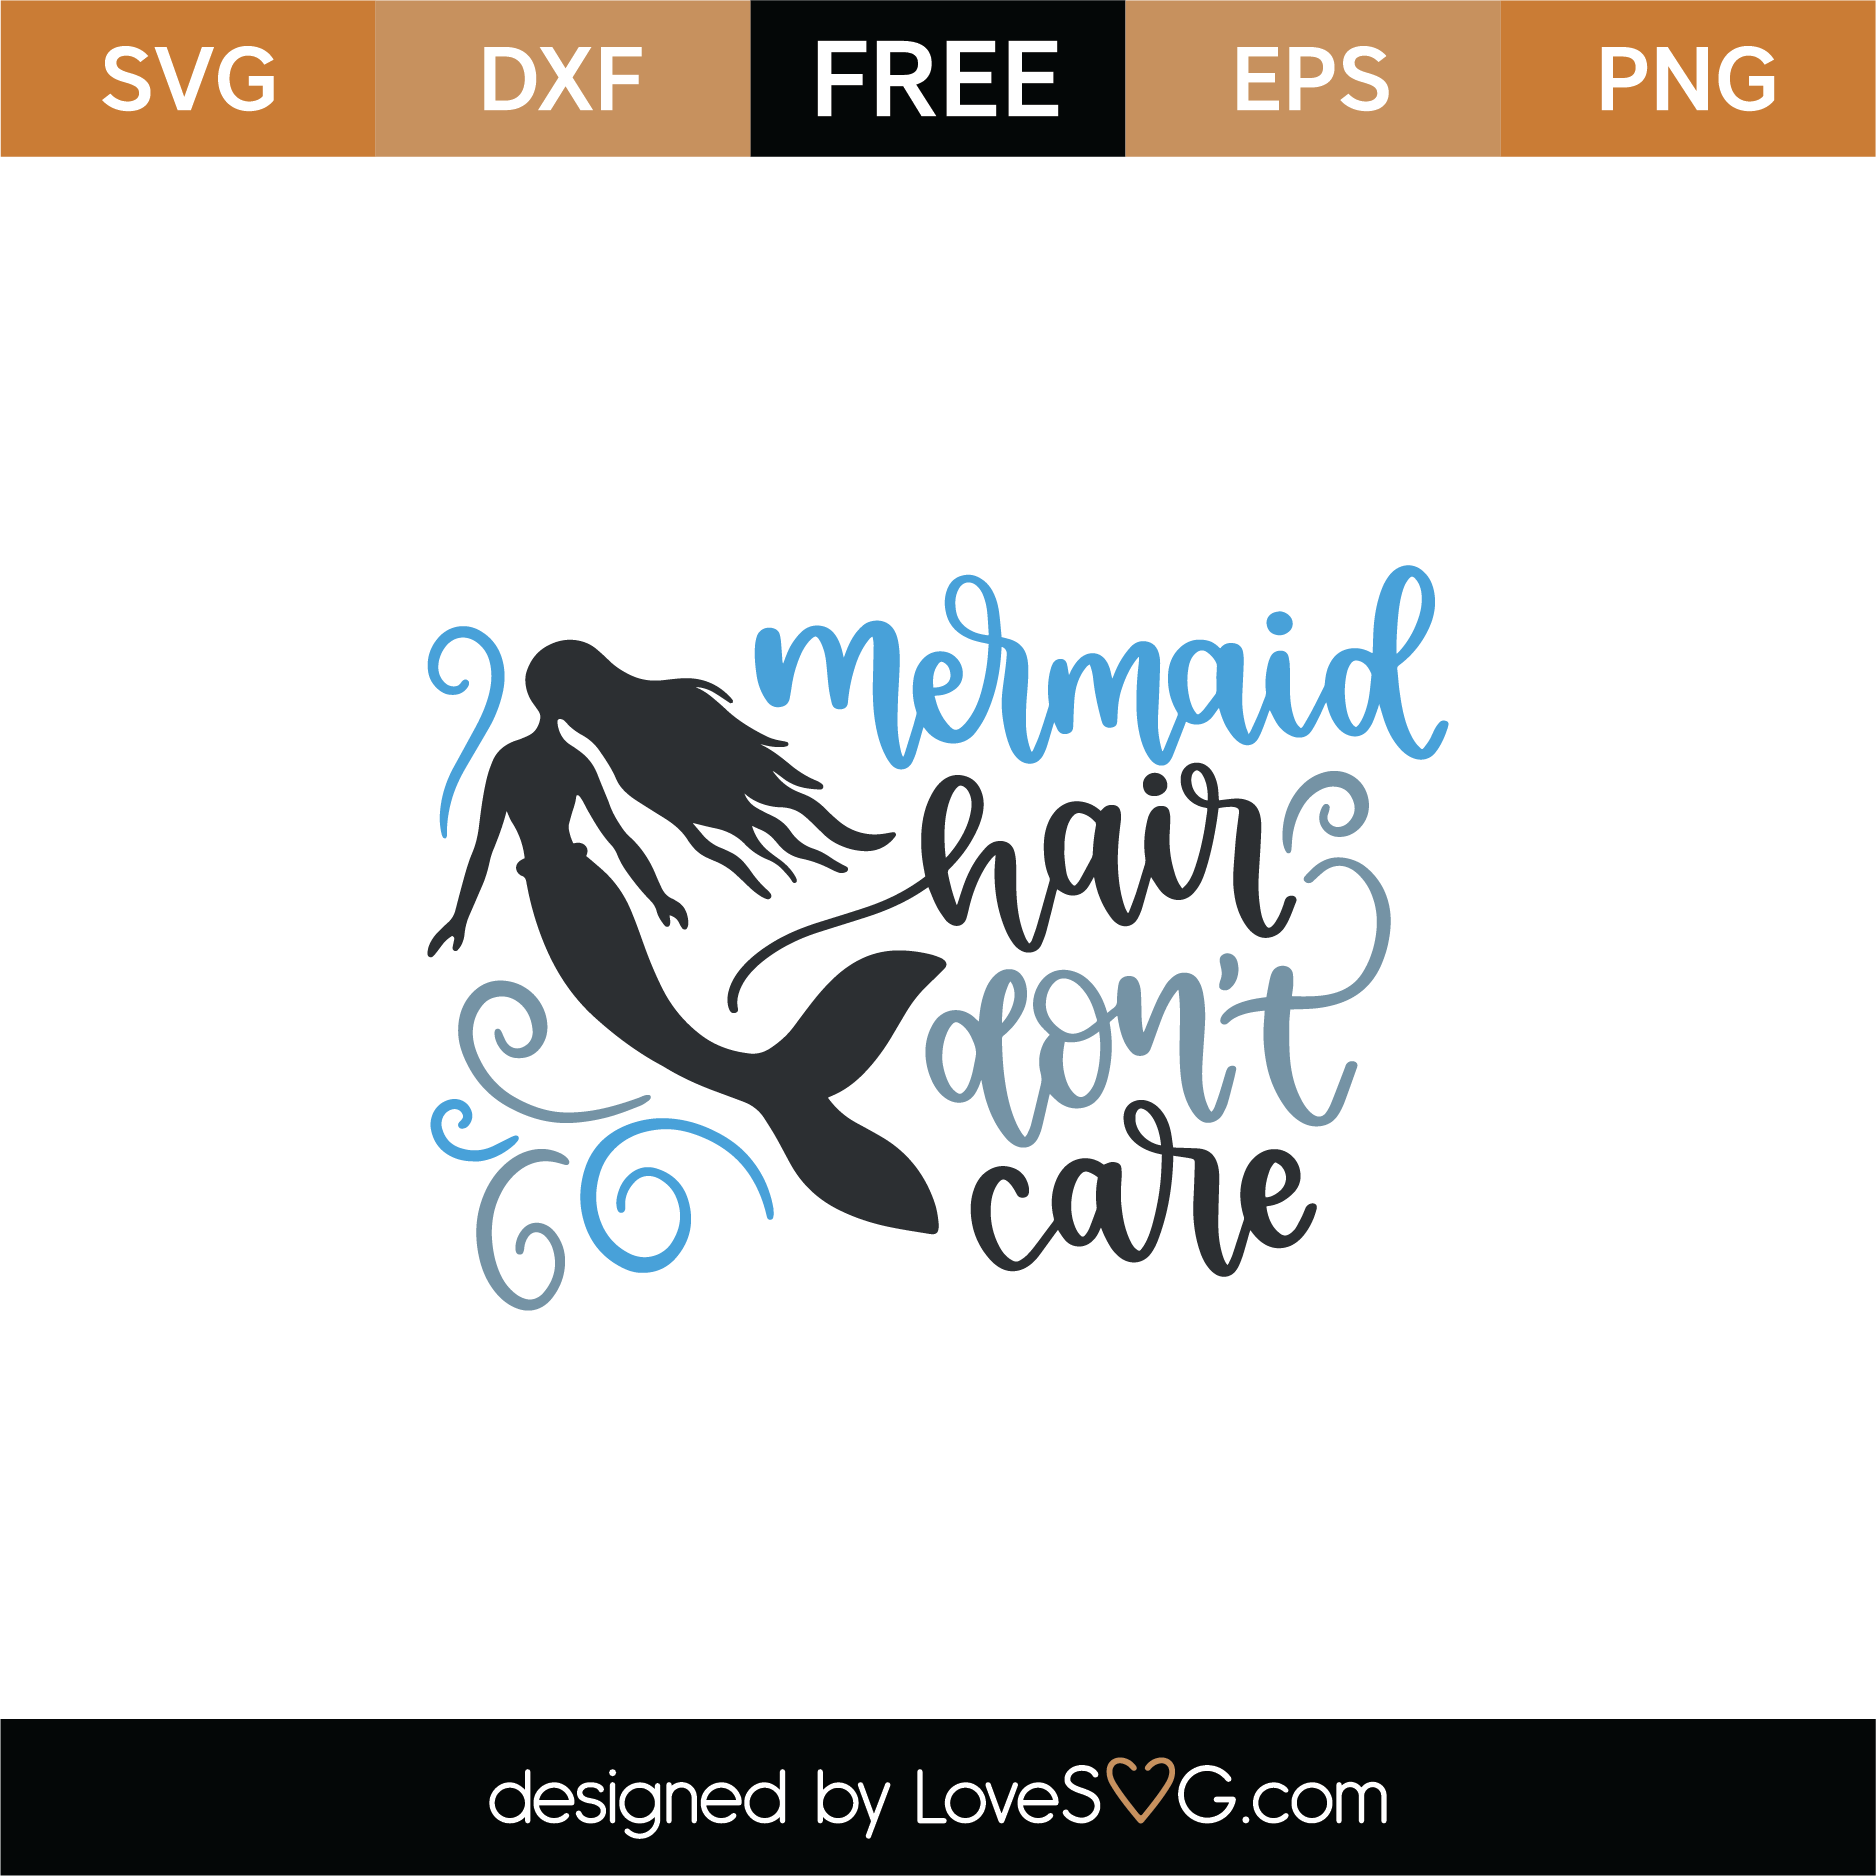 Download Free Mermaid Hair Don't Care SVG Cut File | Lovesvg.com